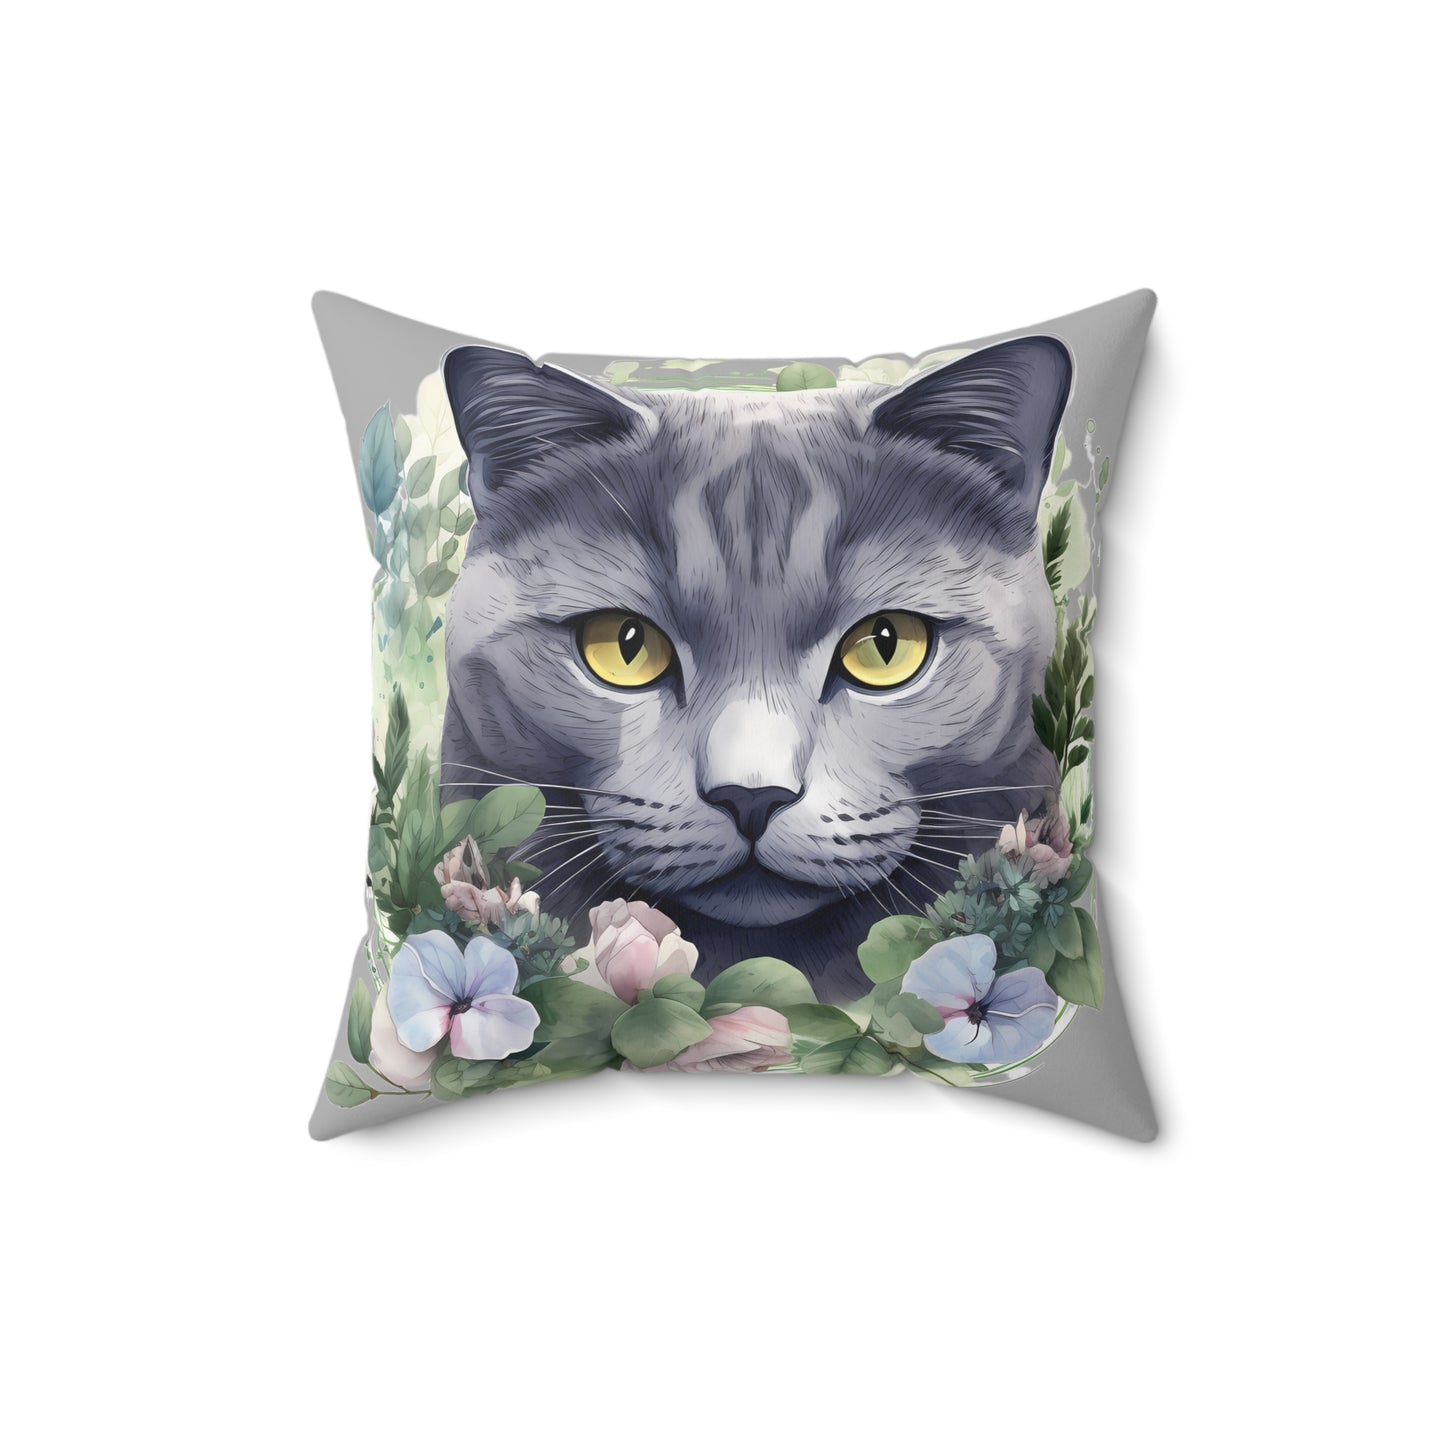 British Shorthair Pet Polyester Square Throw Pillow